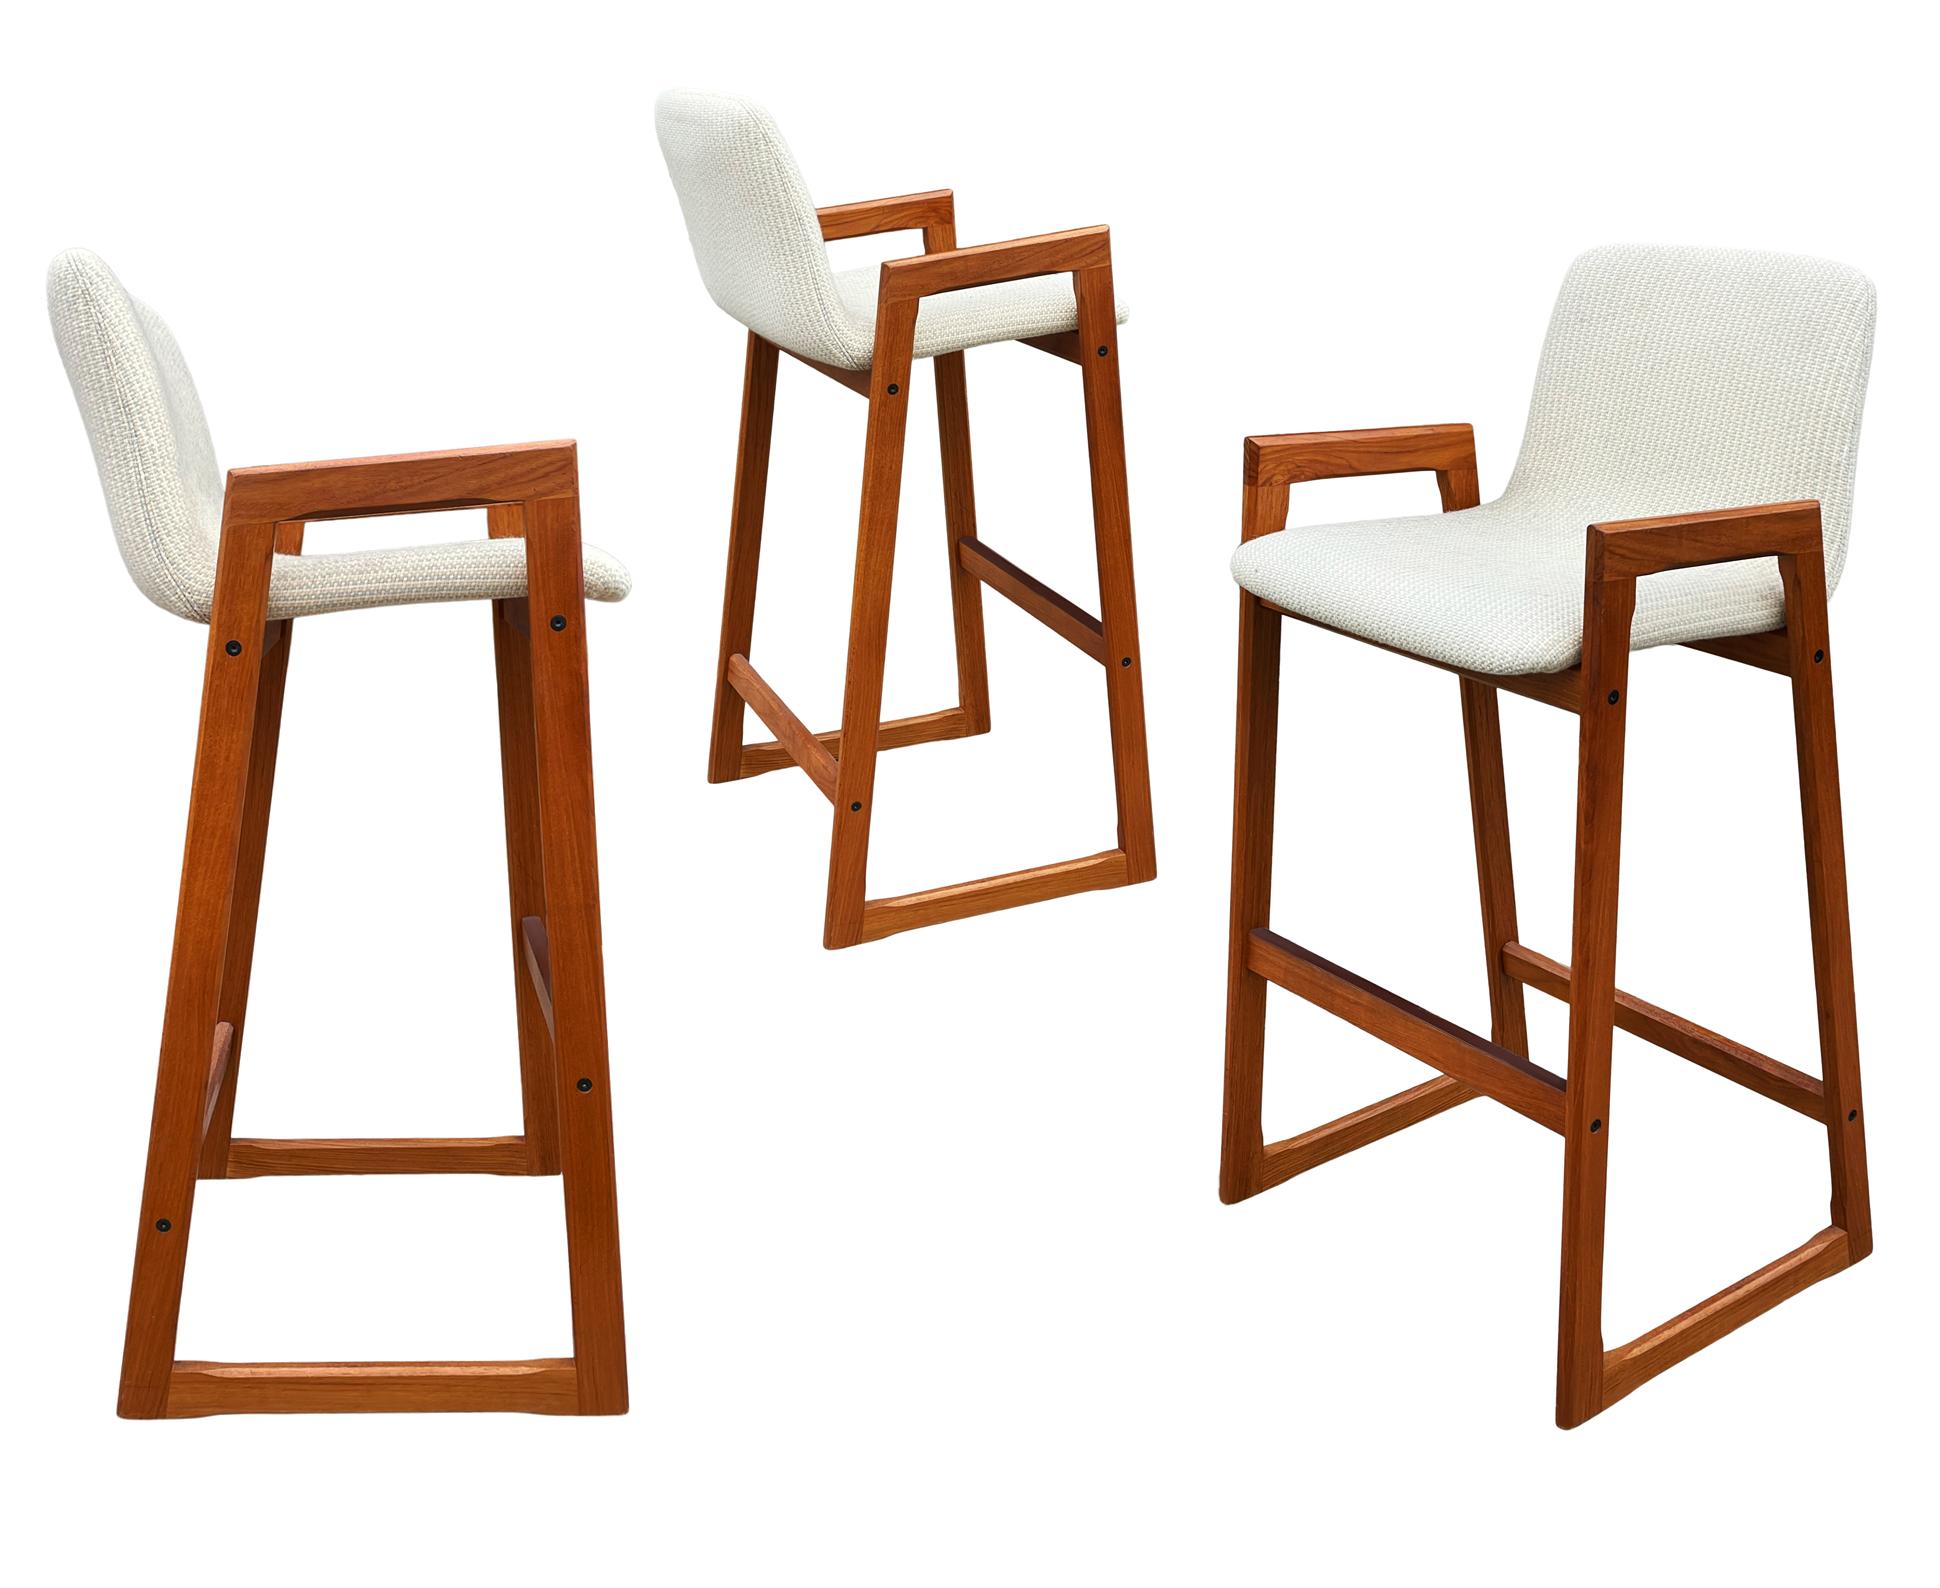 Late 20th Century Set of 3 Midcentury Danish Modern Teak Bar Stools with Fabric Seats For Sale